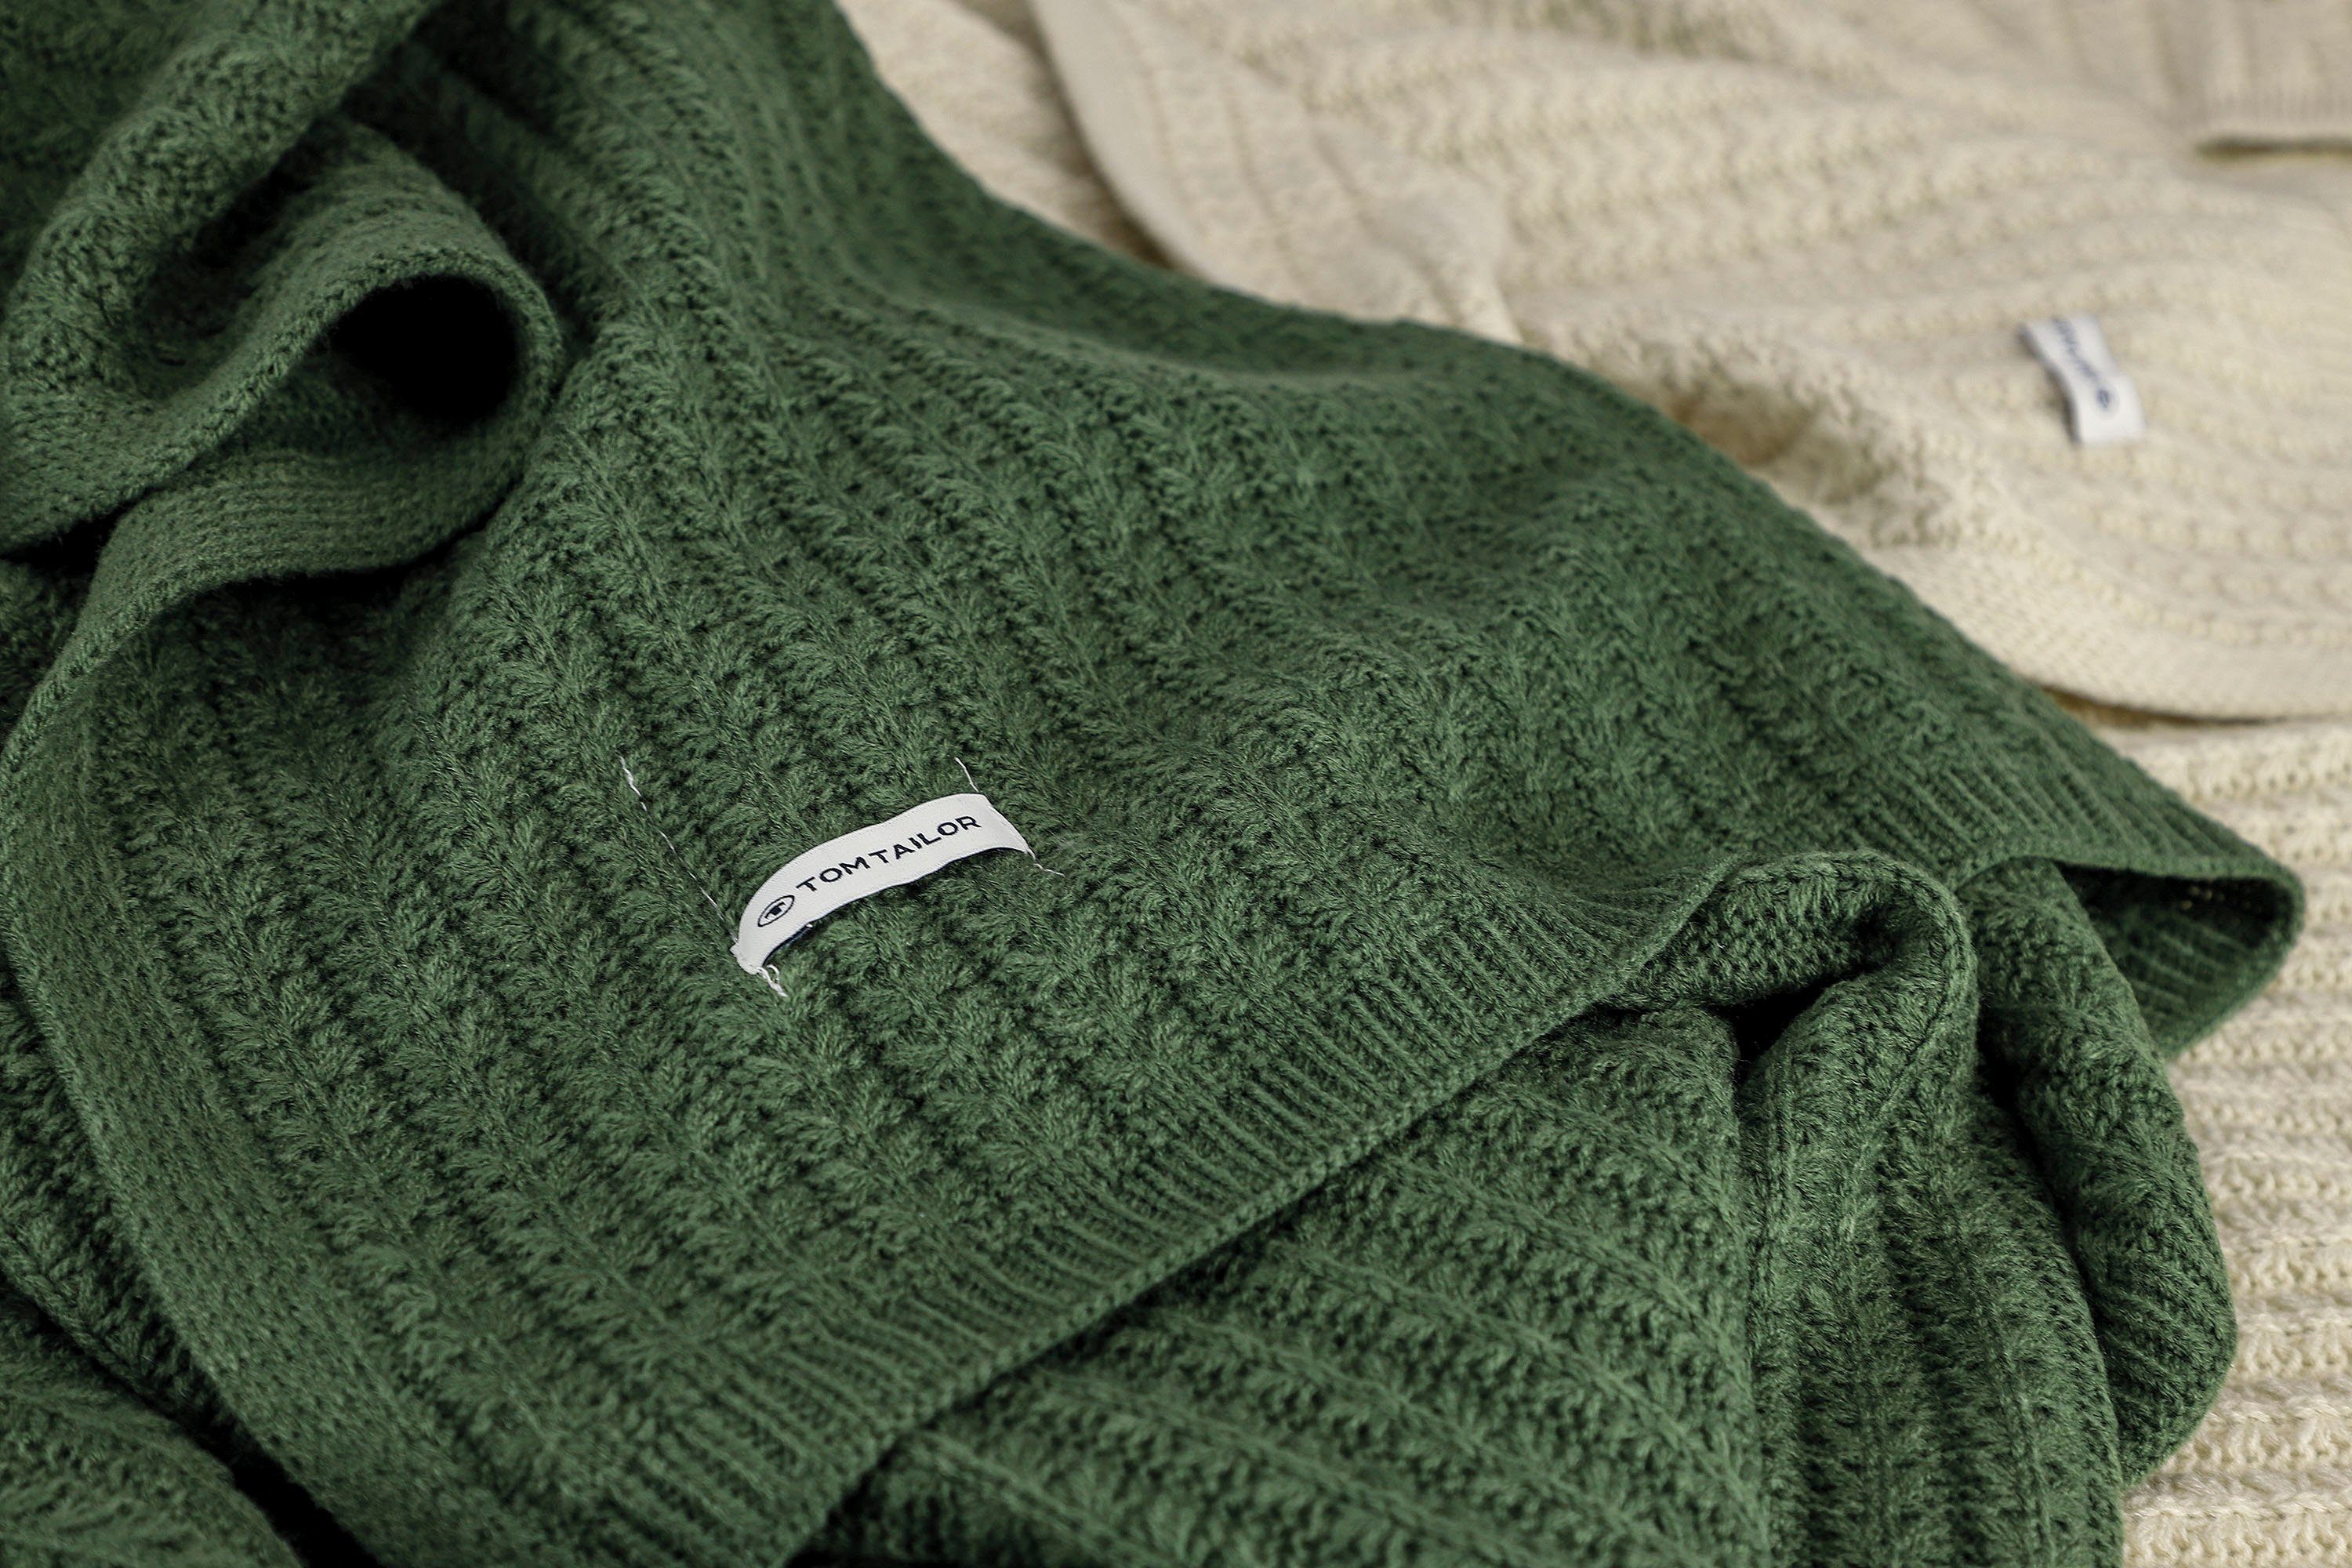 Knitted, TOM HOME TAILOR Plaid grün